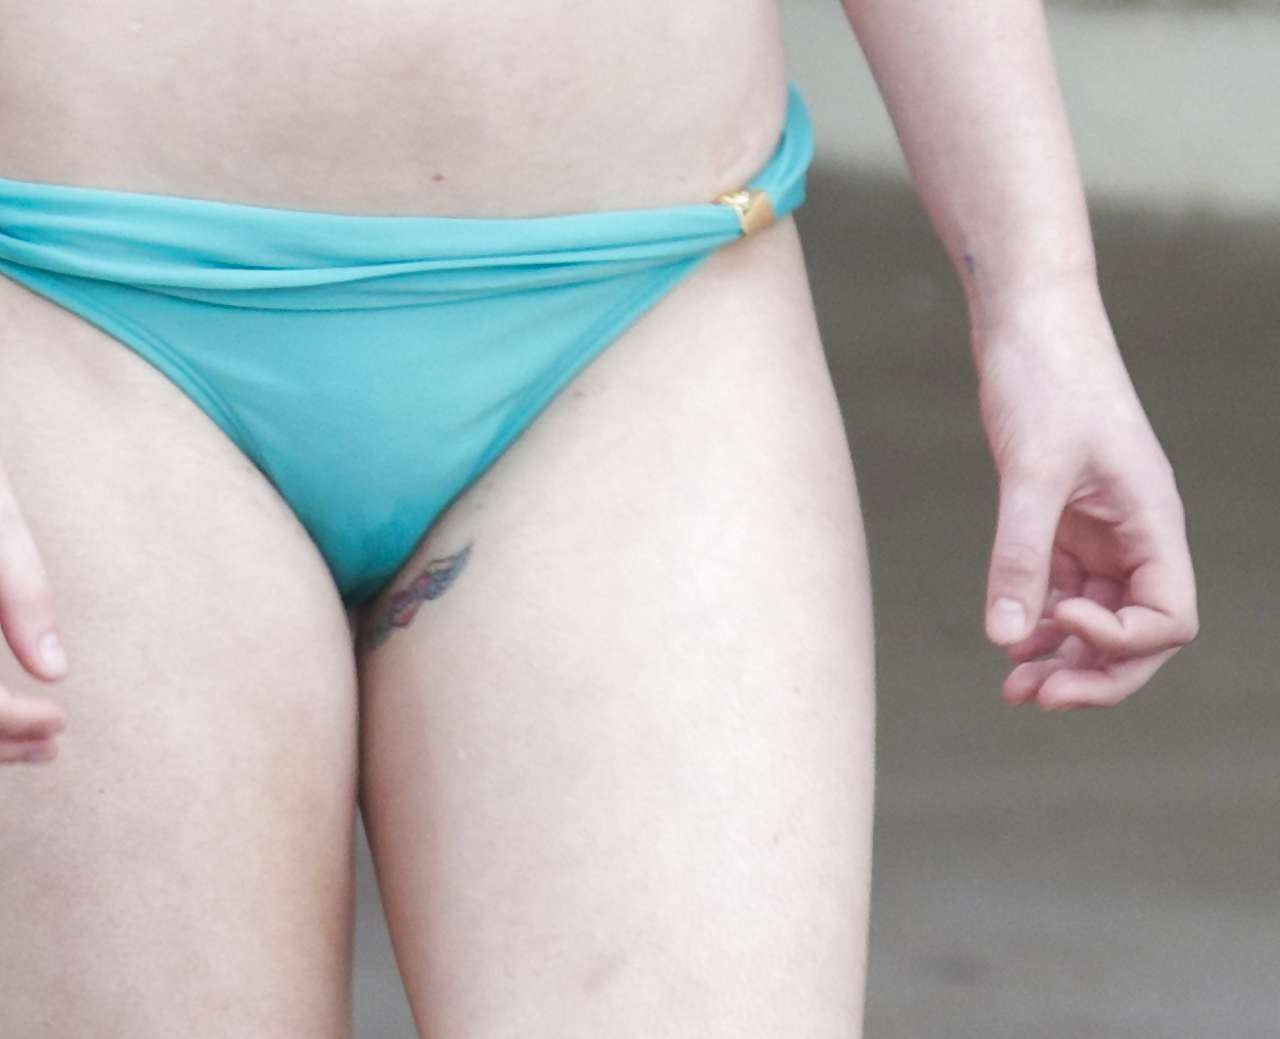 Helen Flanagan hint of nipple slip in blue bikini on beach paparazzi pictures #75294874